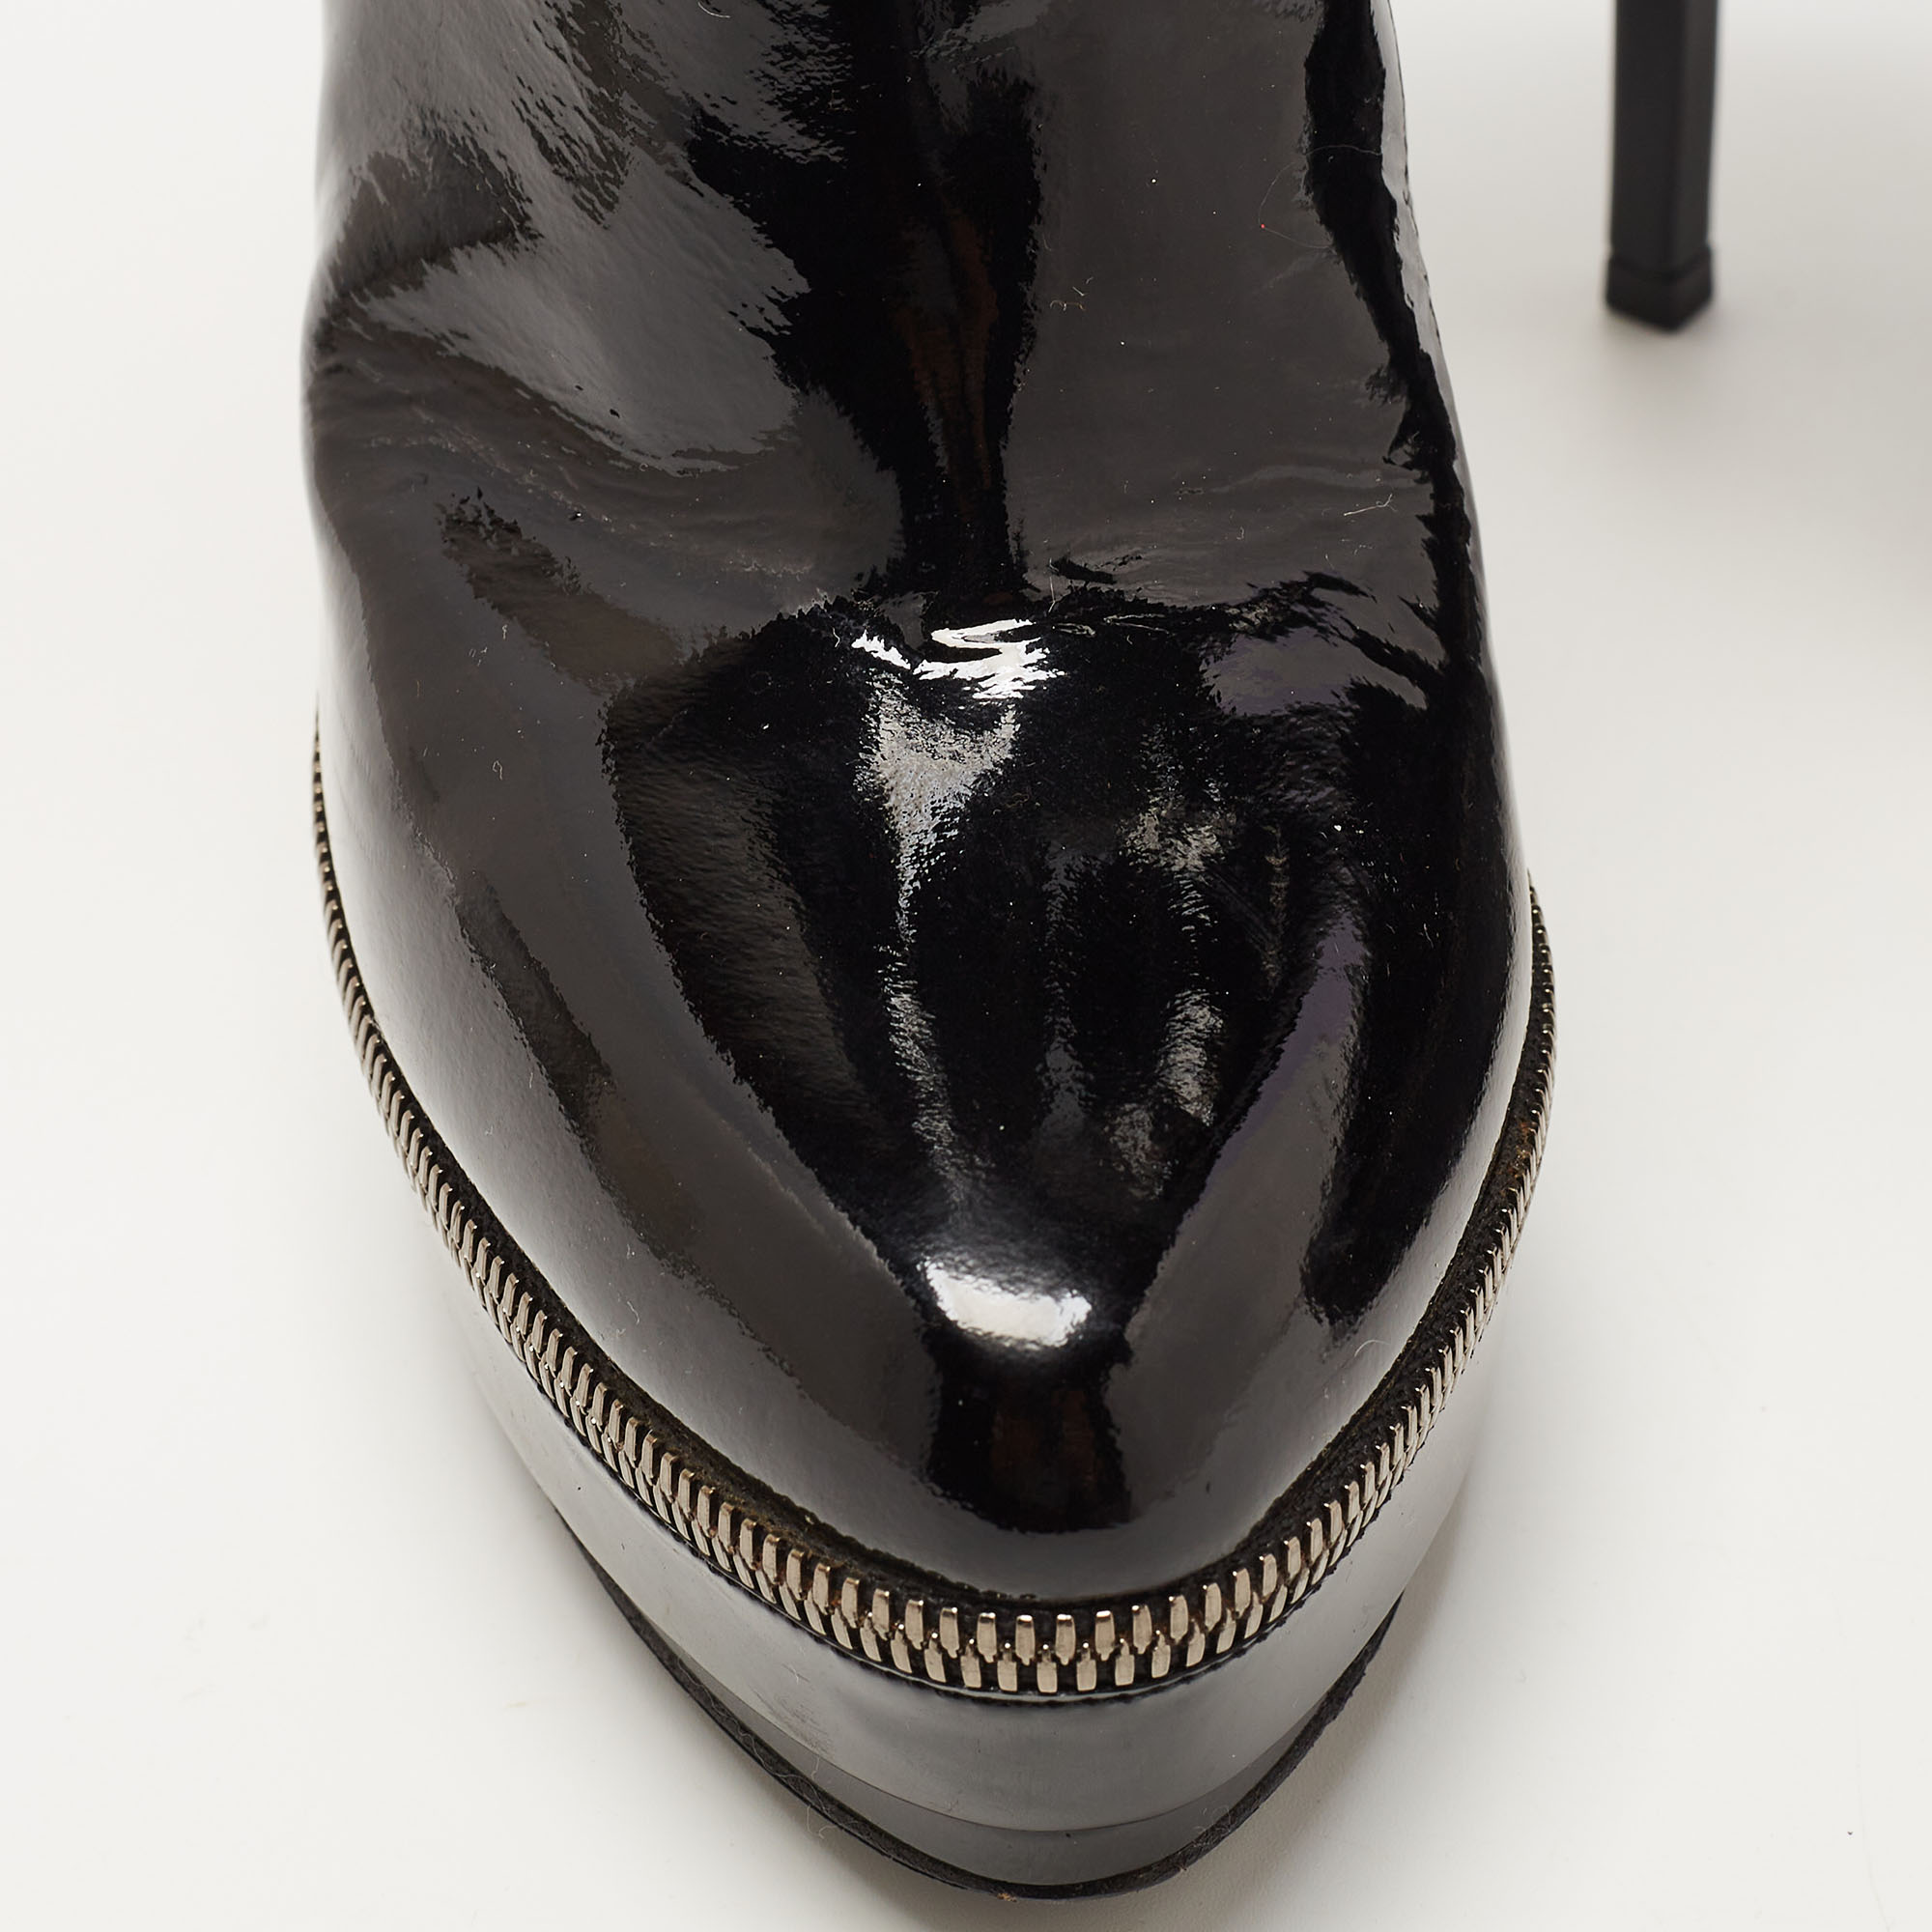 Gucci Black Patent Leather Zip Detail Platform Ankle Boots Size 38.5